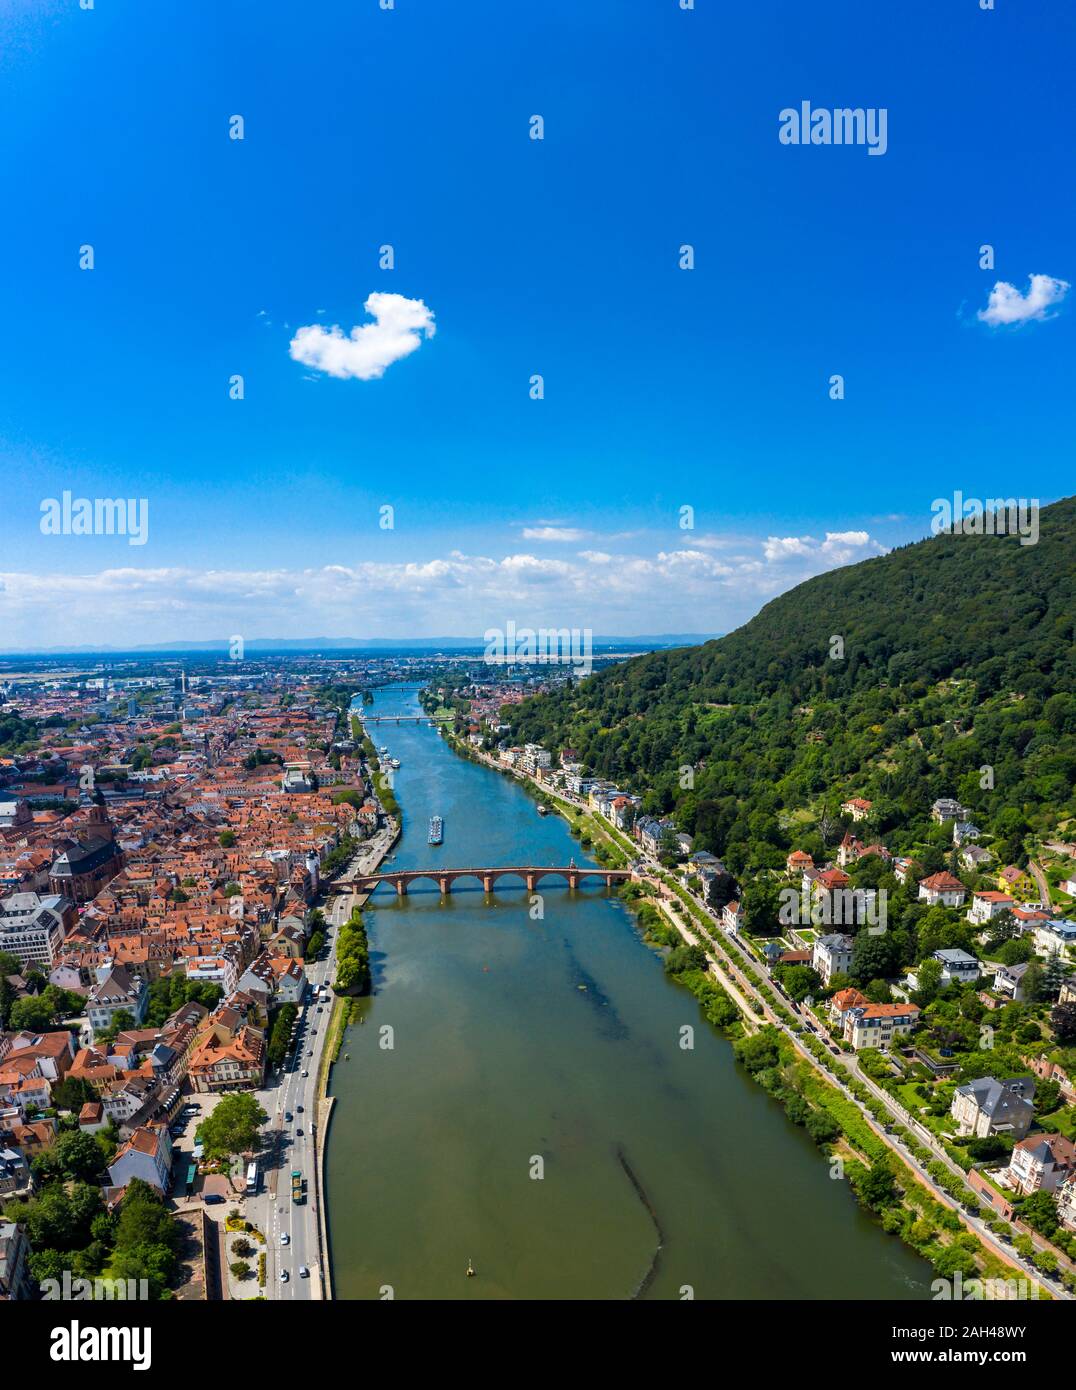 Germany, Baden-Wurttemberg, Heidelberg, Old town and bridge over Neckar river in summer Stock Photo